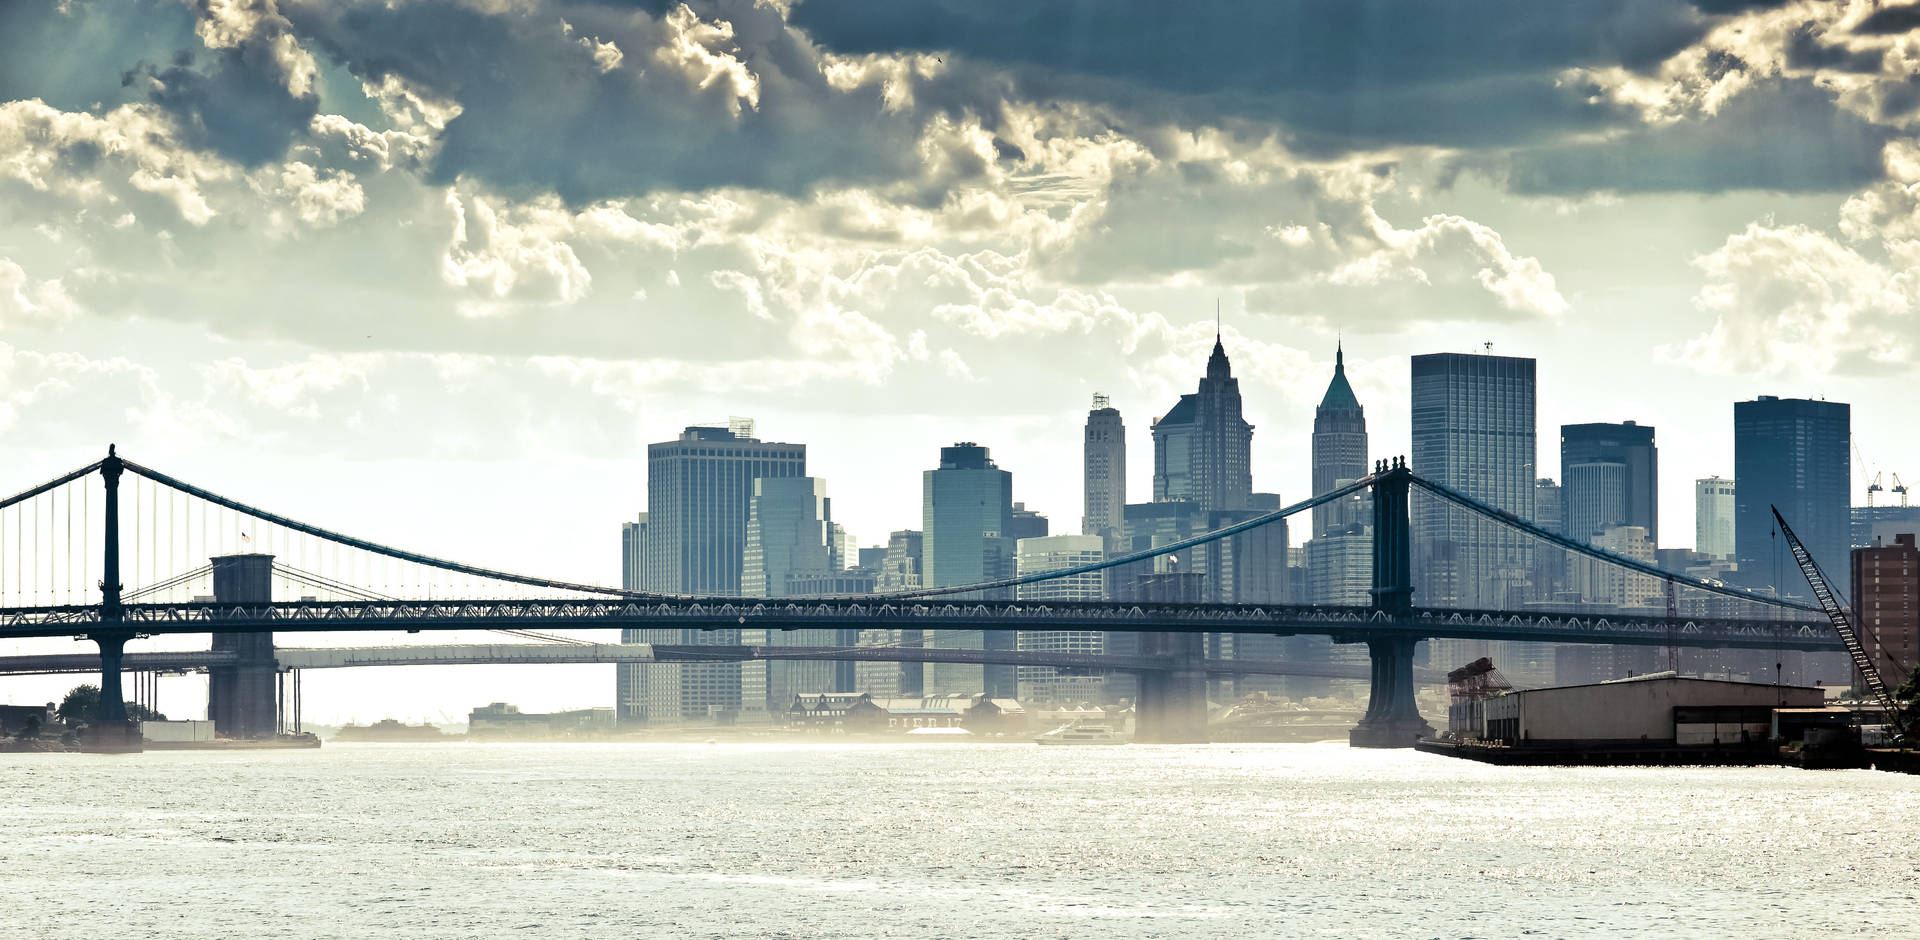 The iconic Manhattan Bridge in New York City Wallpaper